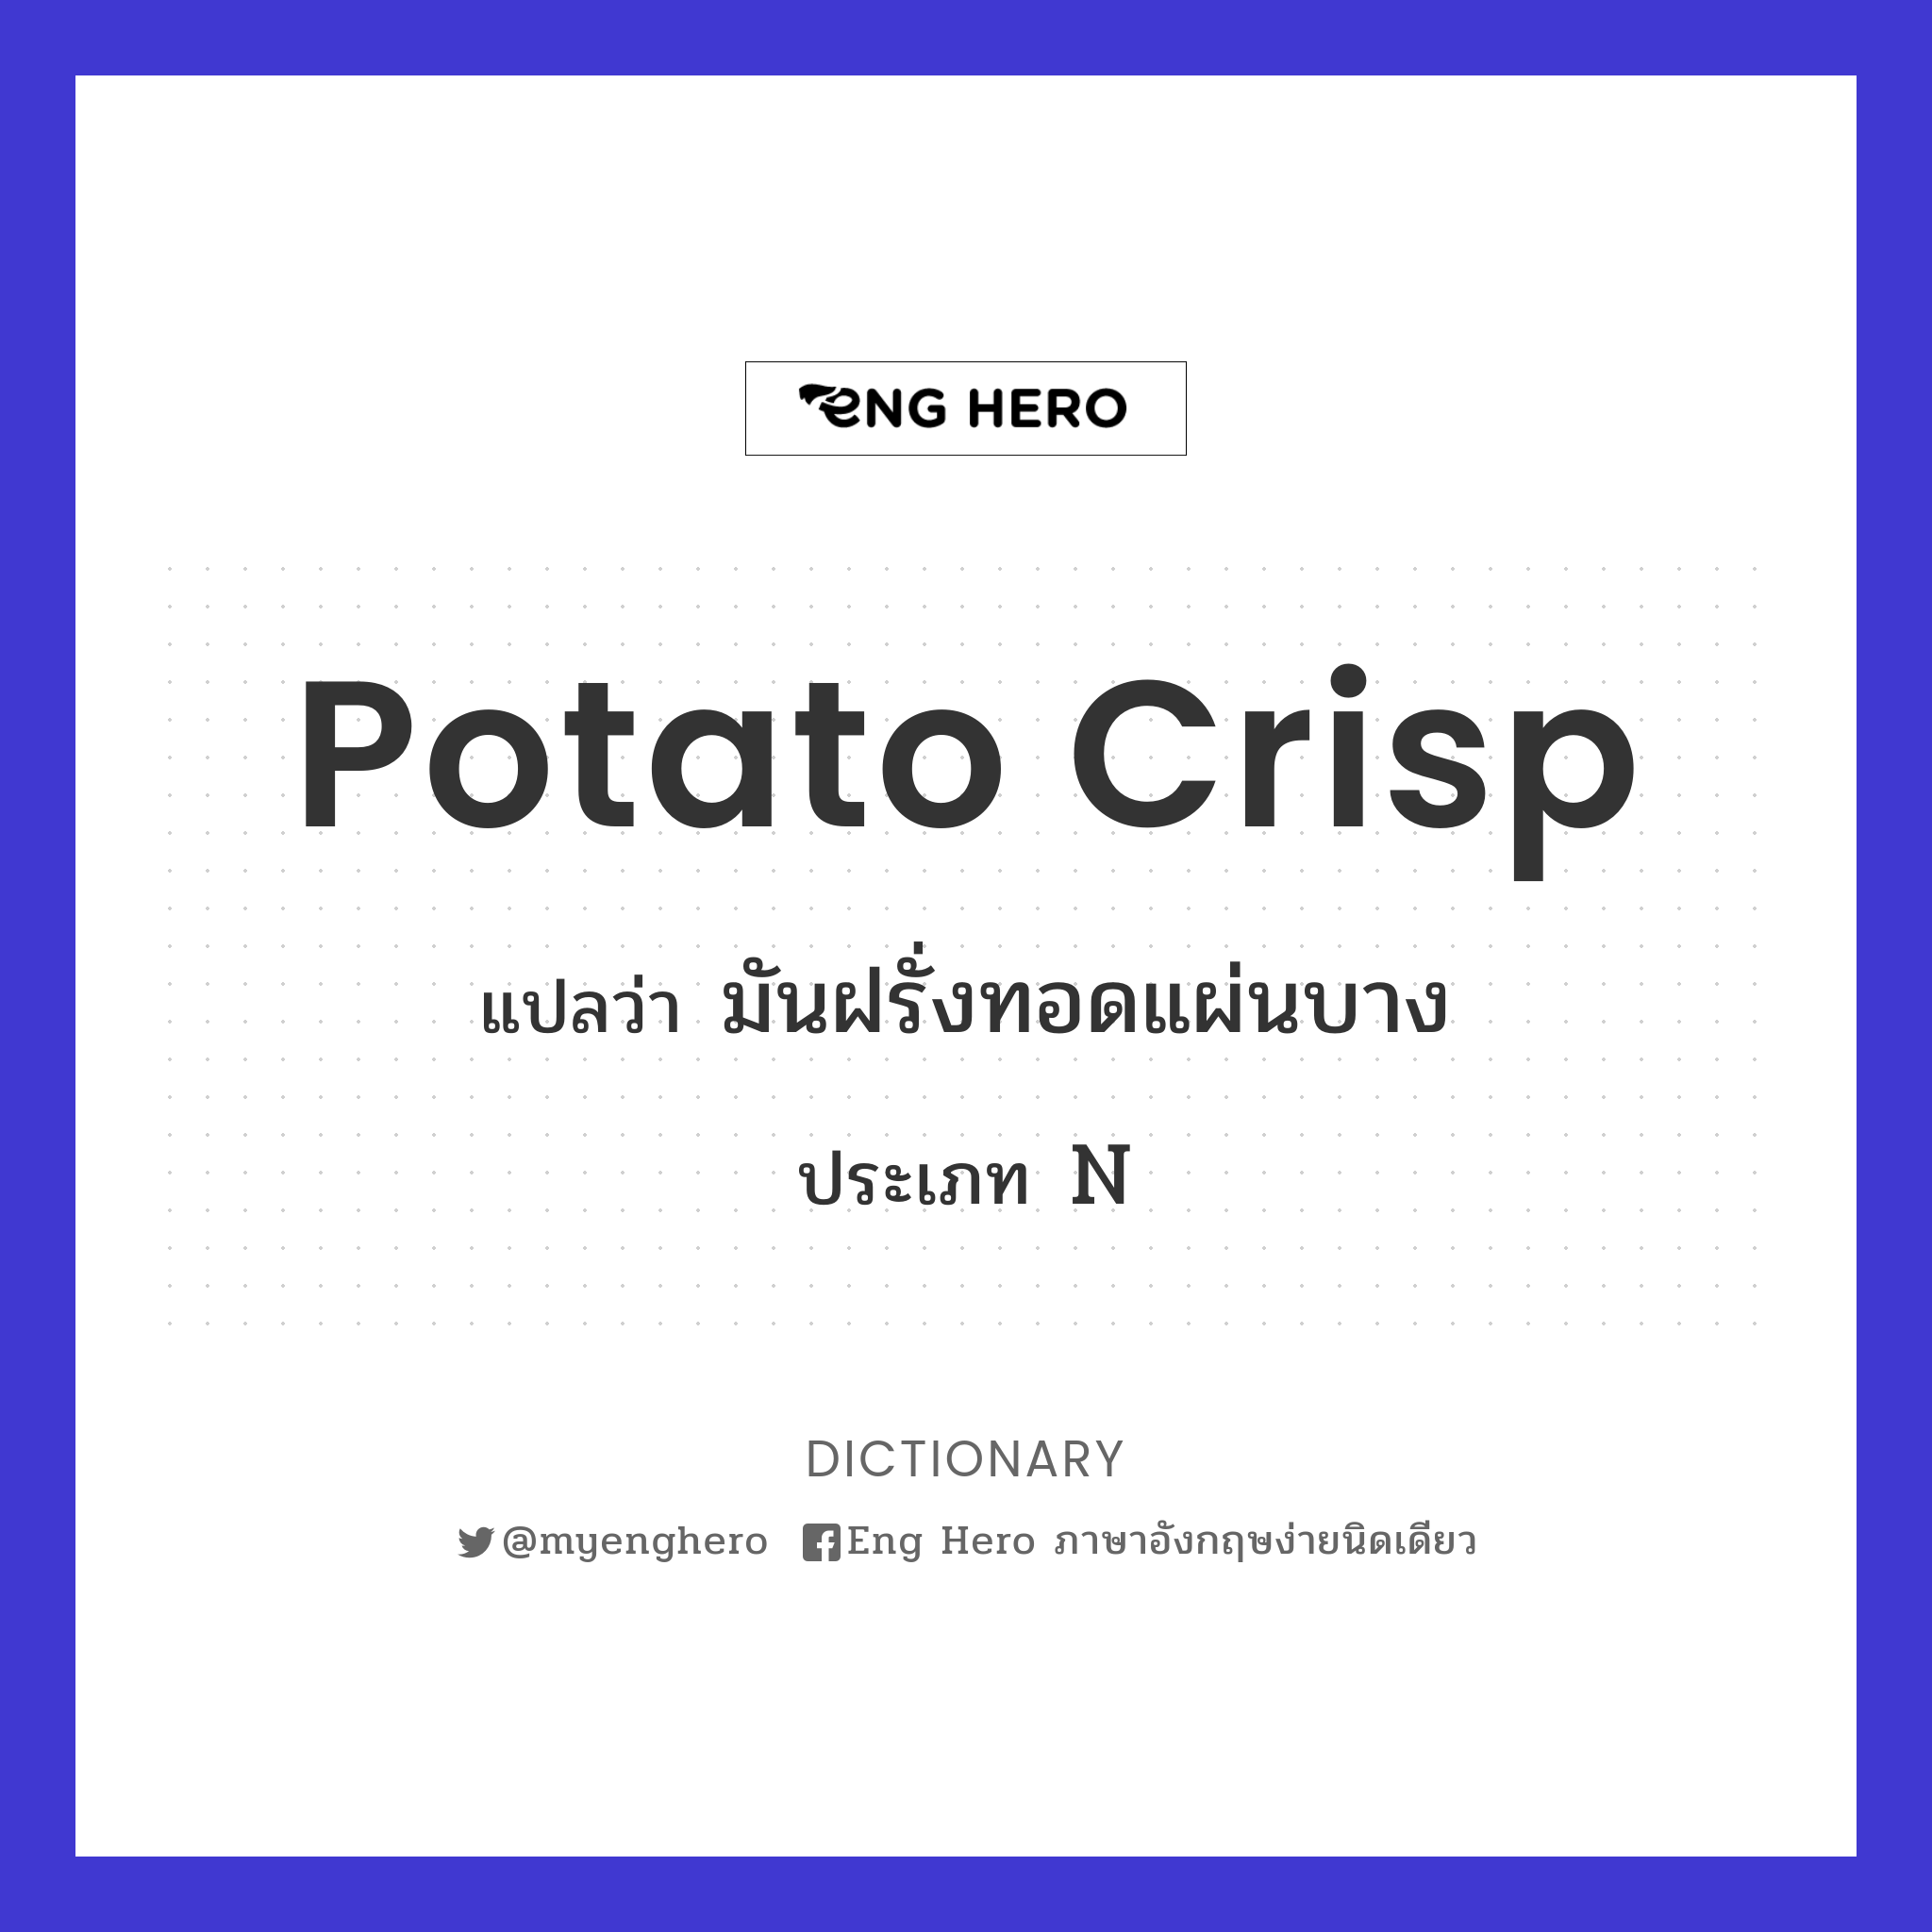 potato crisp